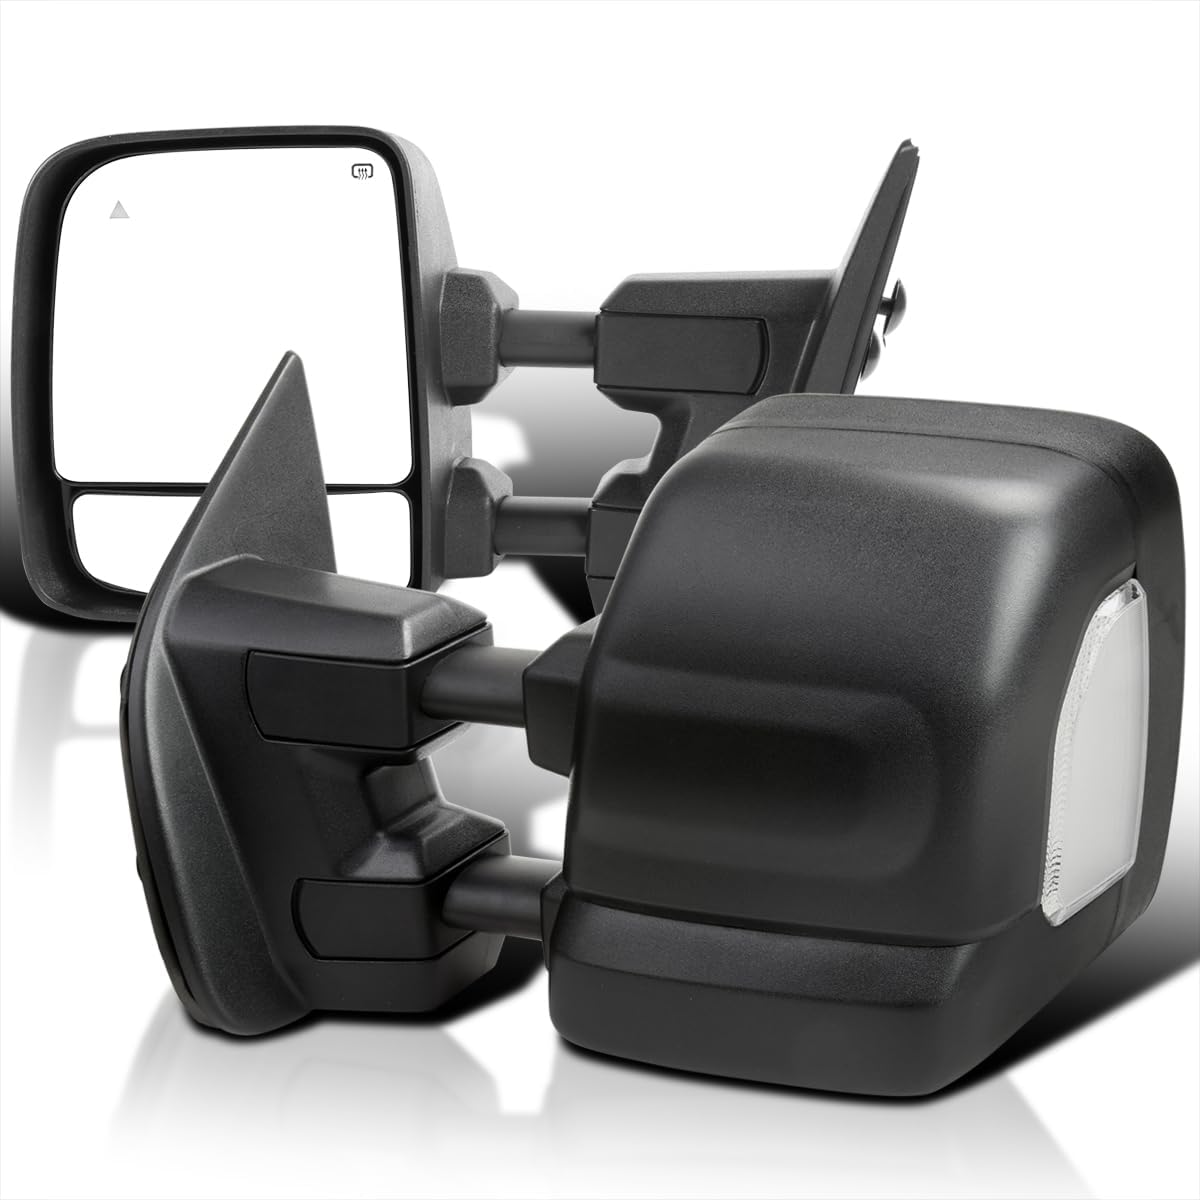 Towing mirrors for Nissan Titan Pickup trucks